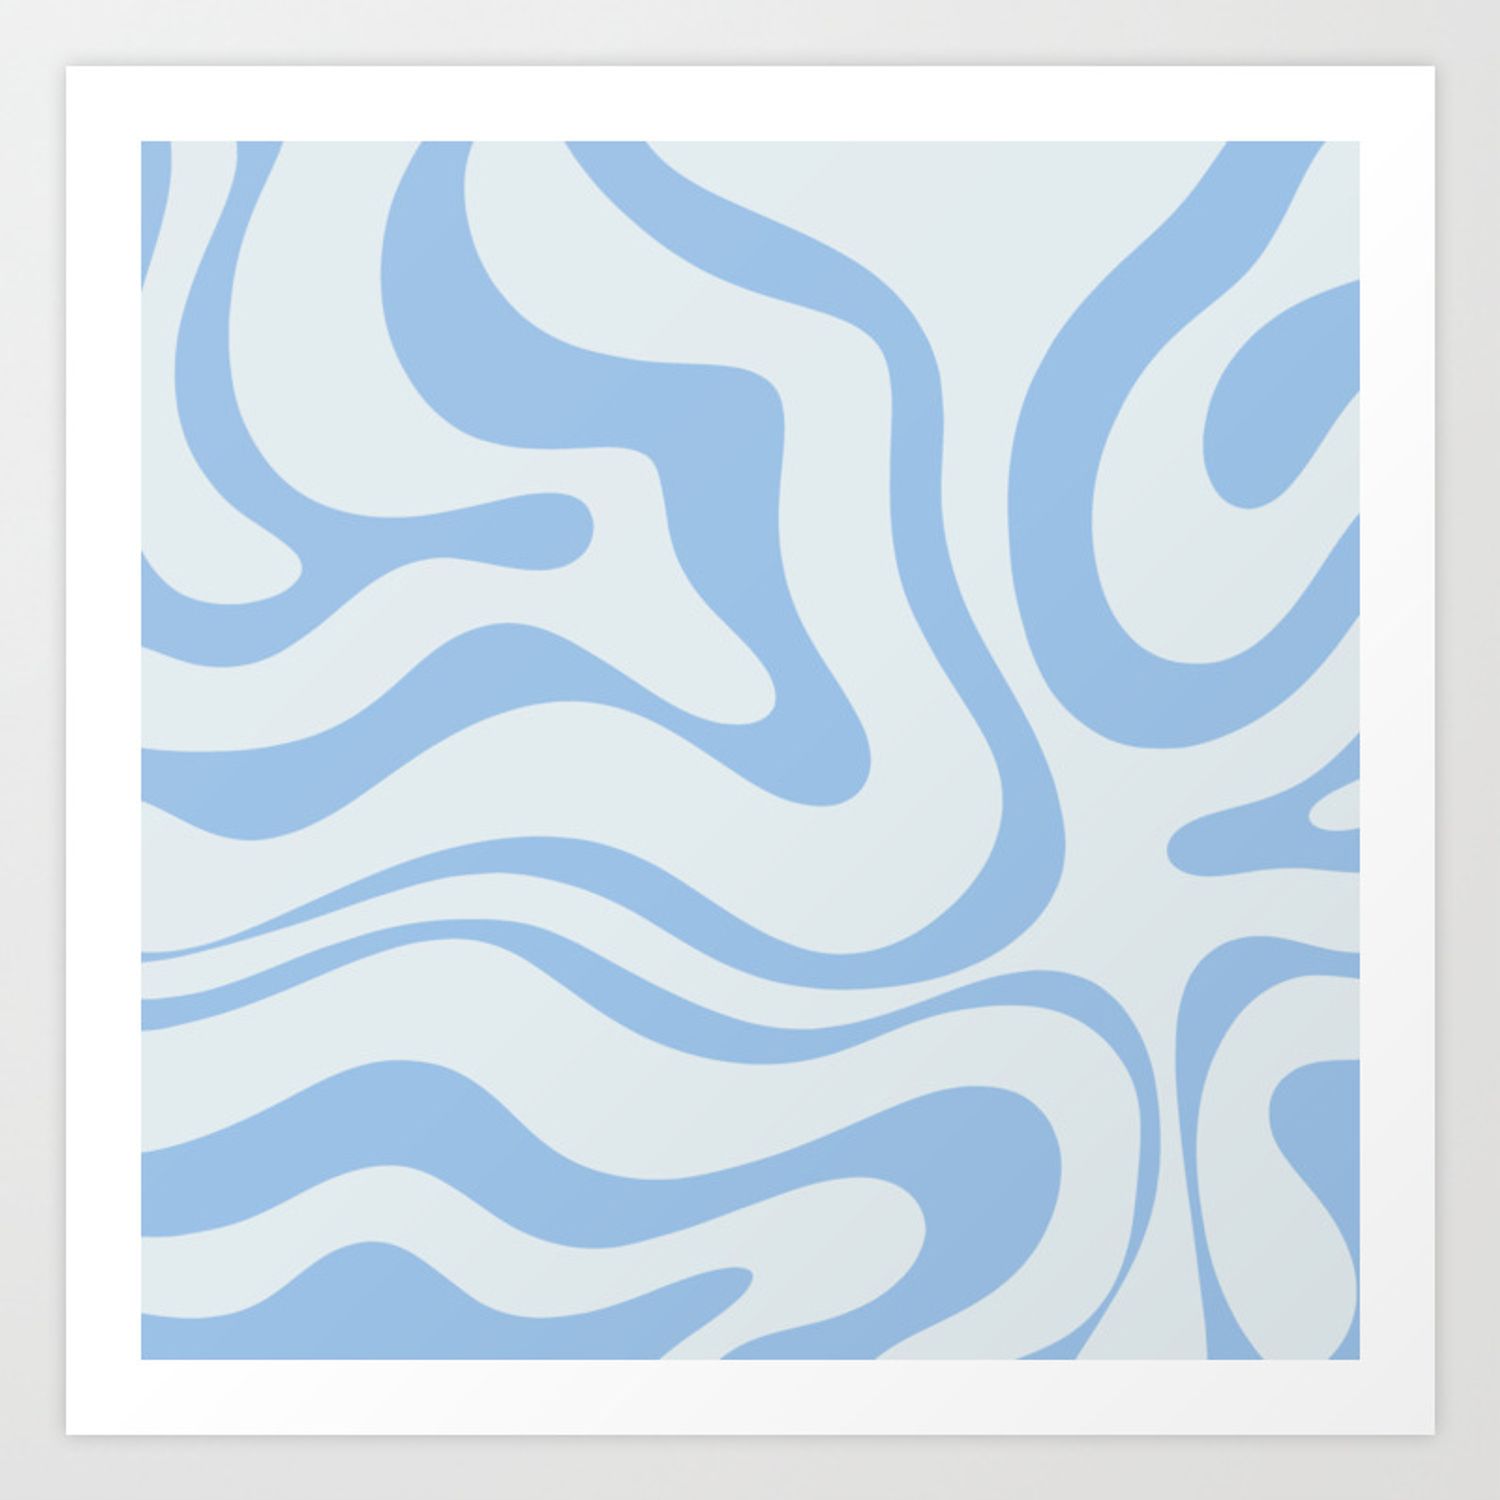 Soft Liquid Swirl Abstract Pattern Square In Powder Blue Art Print Kierkegaard Design Studio | Society6 Intended For Most Popular Liquid Swirl Wall Art (Gallery 19 of 20)